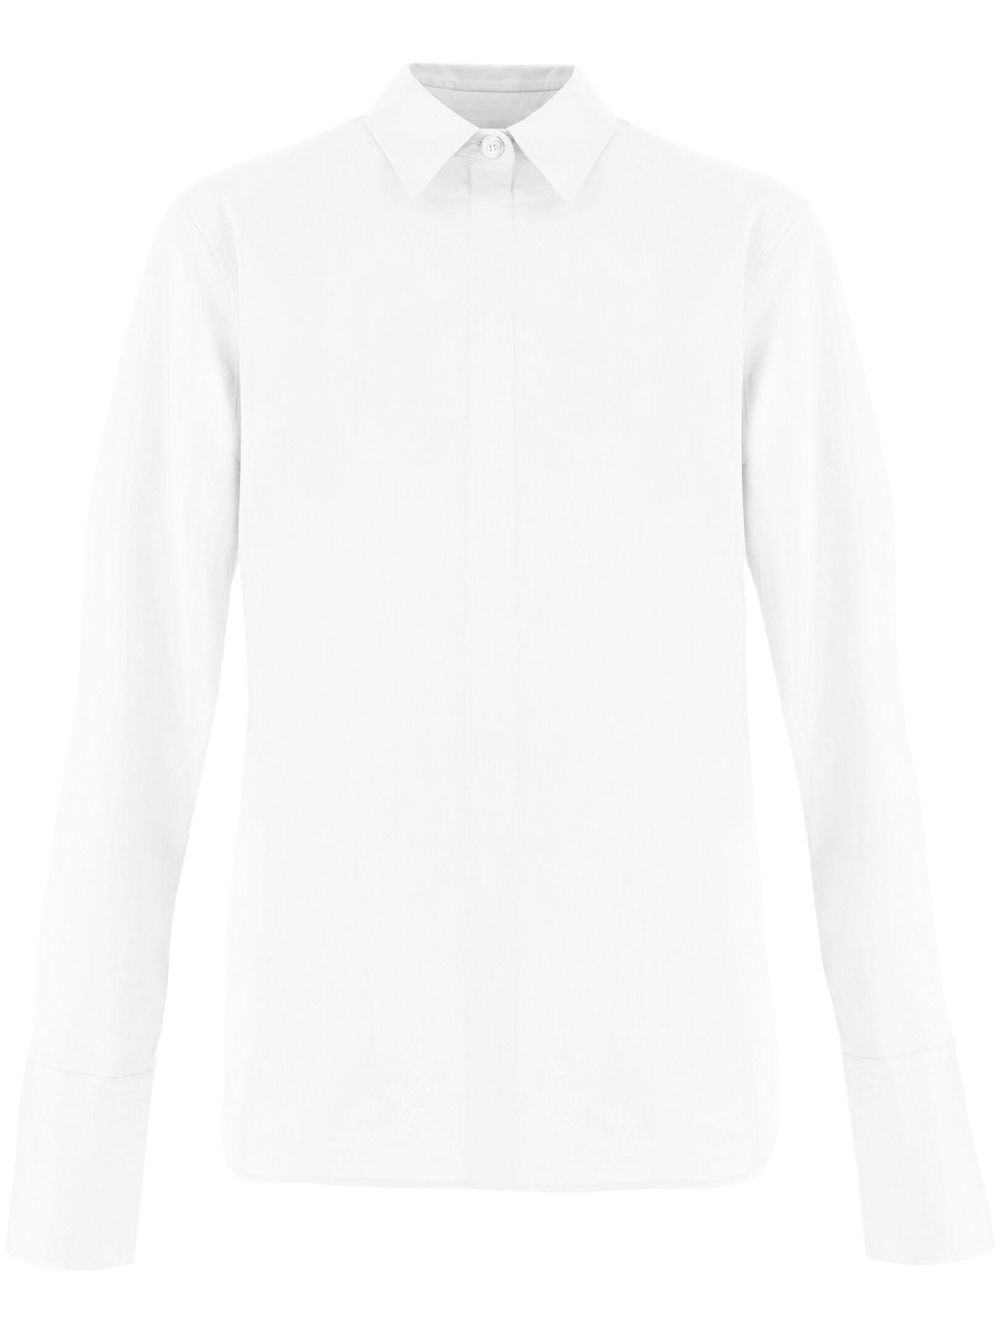 Ferragamo Shirts White-men > clothing > shirts-Ferragamo-Urbanheer